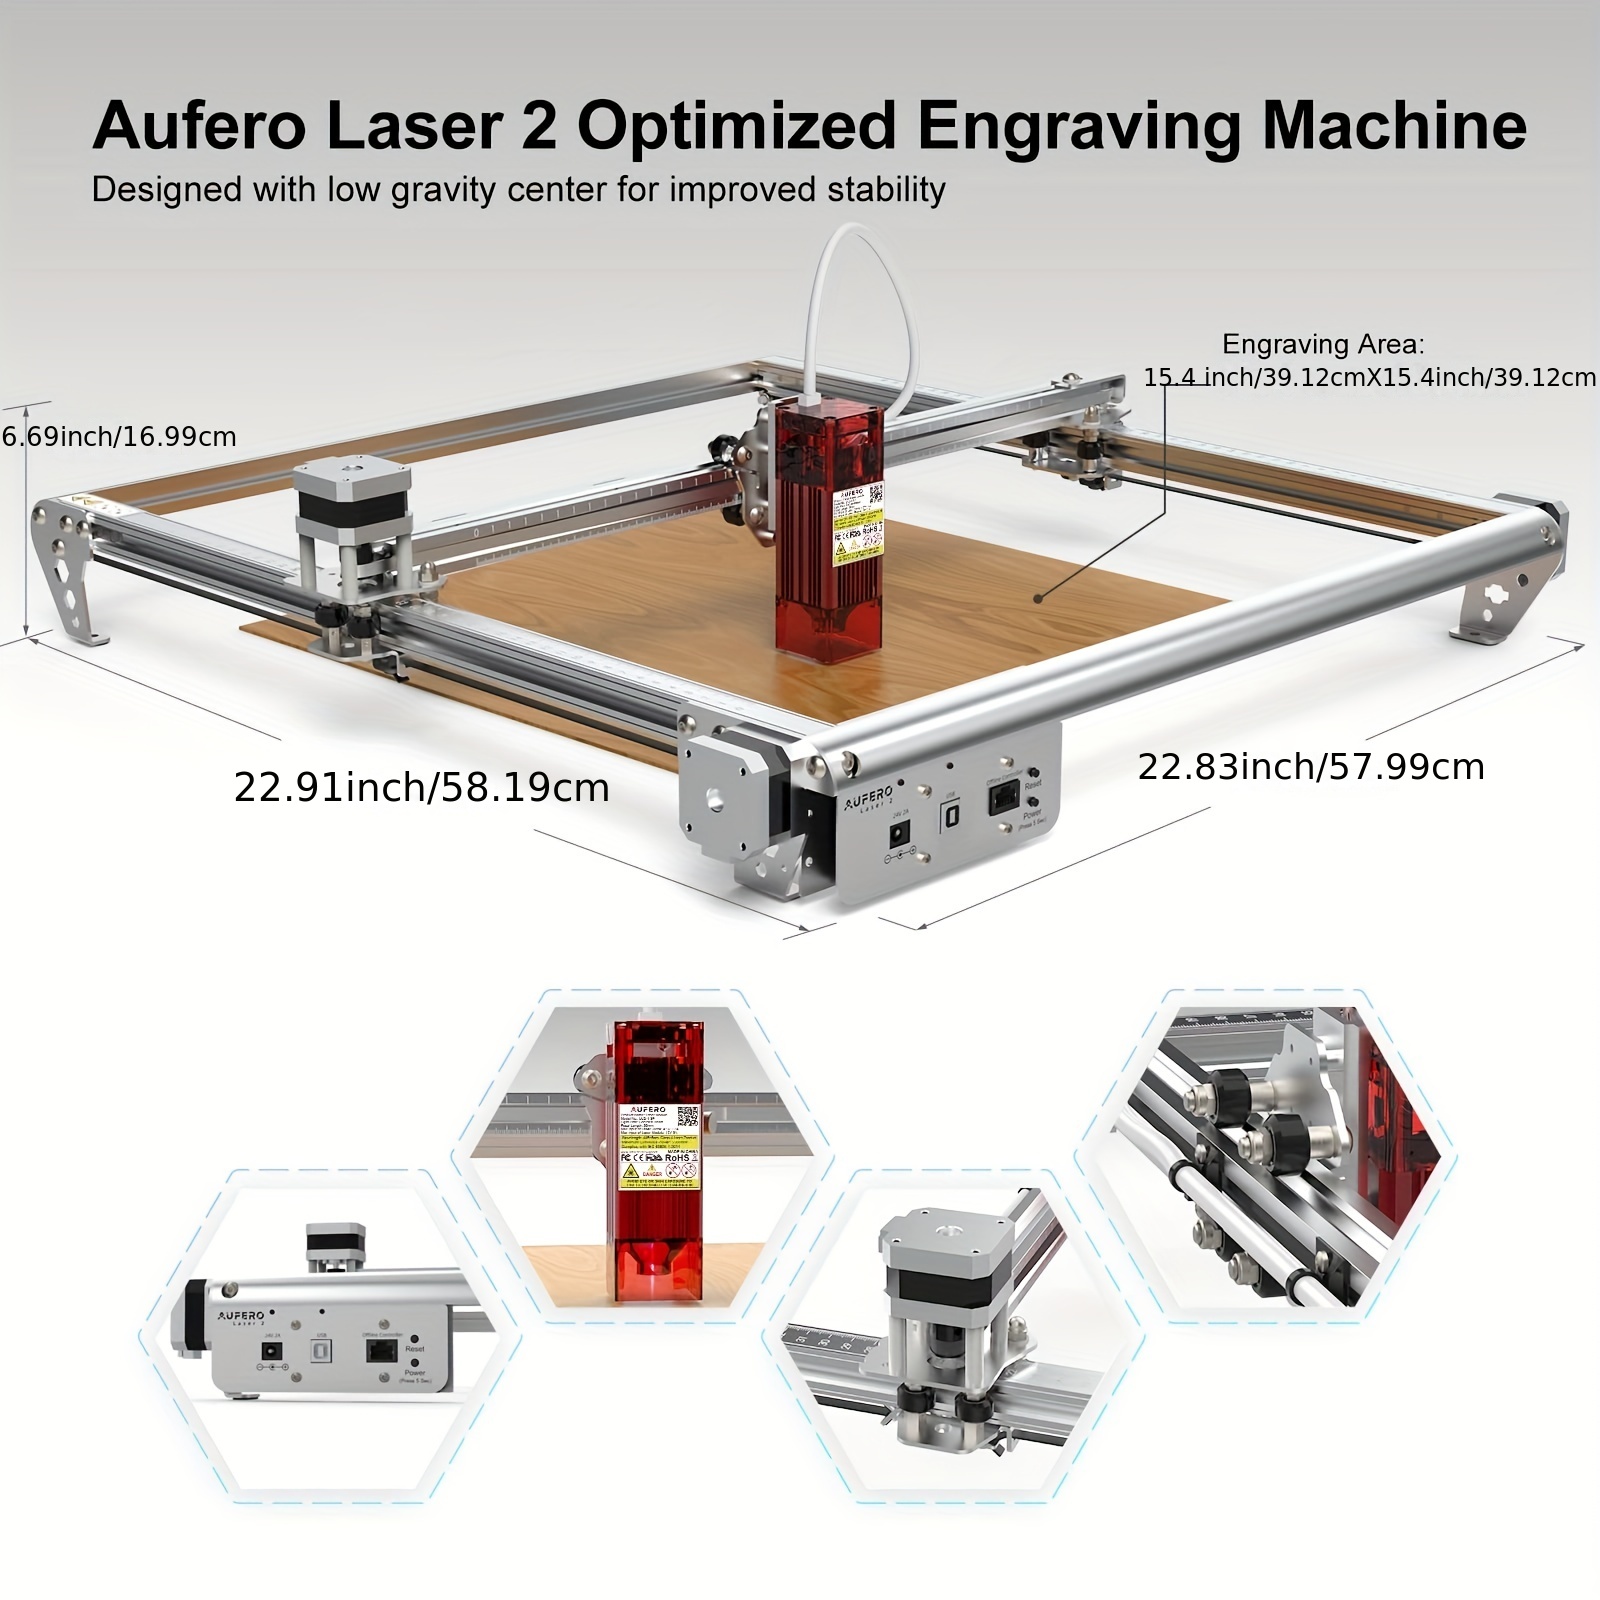 ORTUR Aufero Laser 1 Portable Laser Engraving Machine, 5W Small Laser  Engraving Machine for Wood, Leather, Acrylic, 7.1 x 7.1 Engraving Area,  Eye Protection 